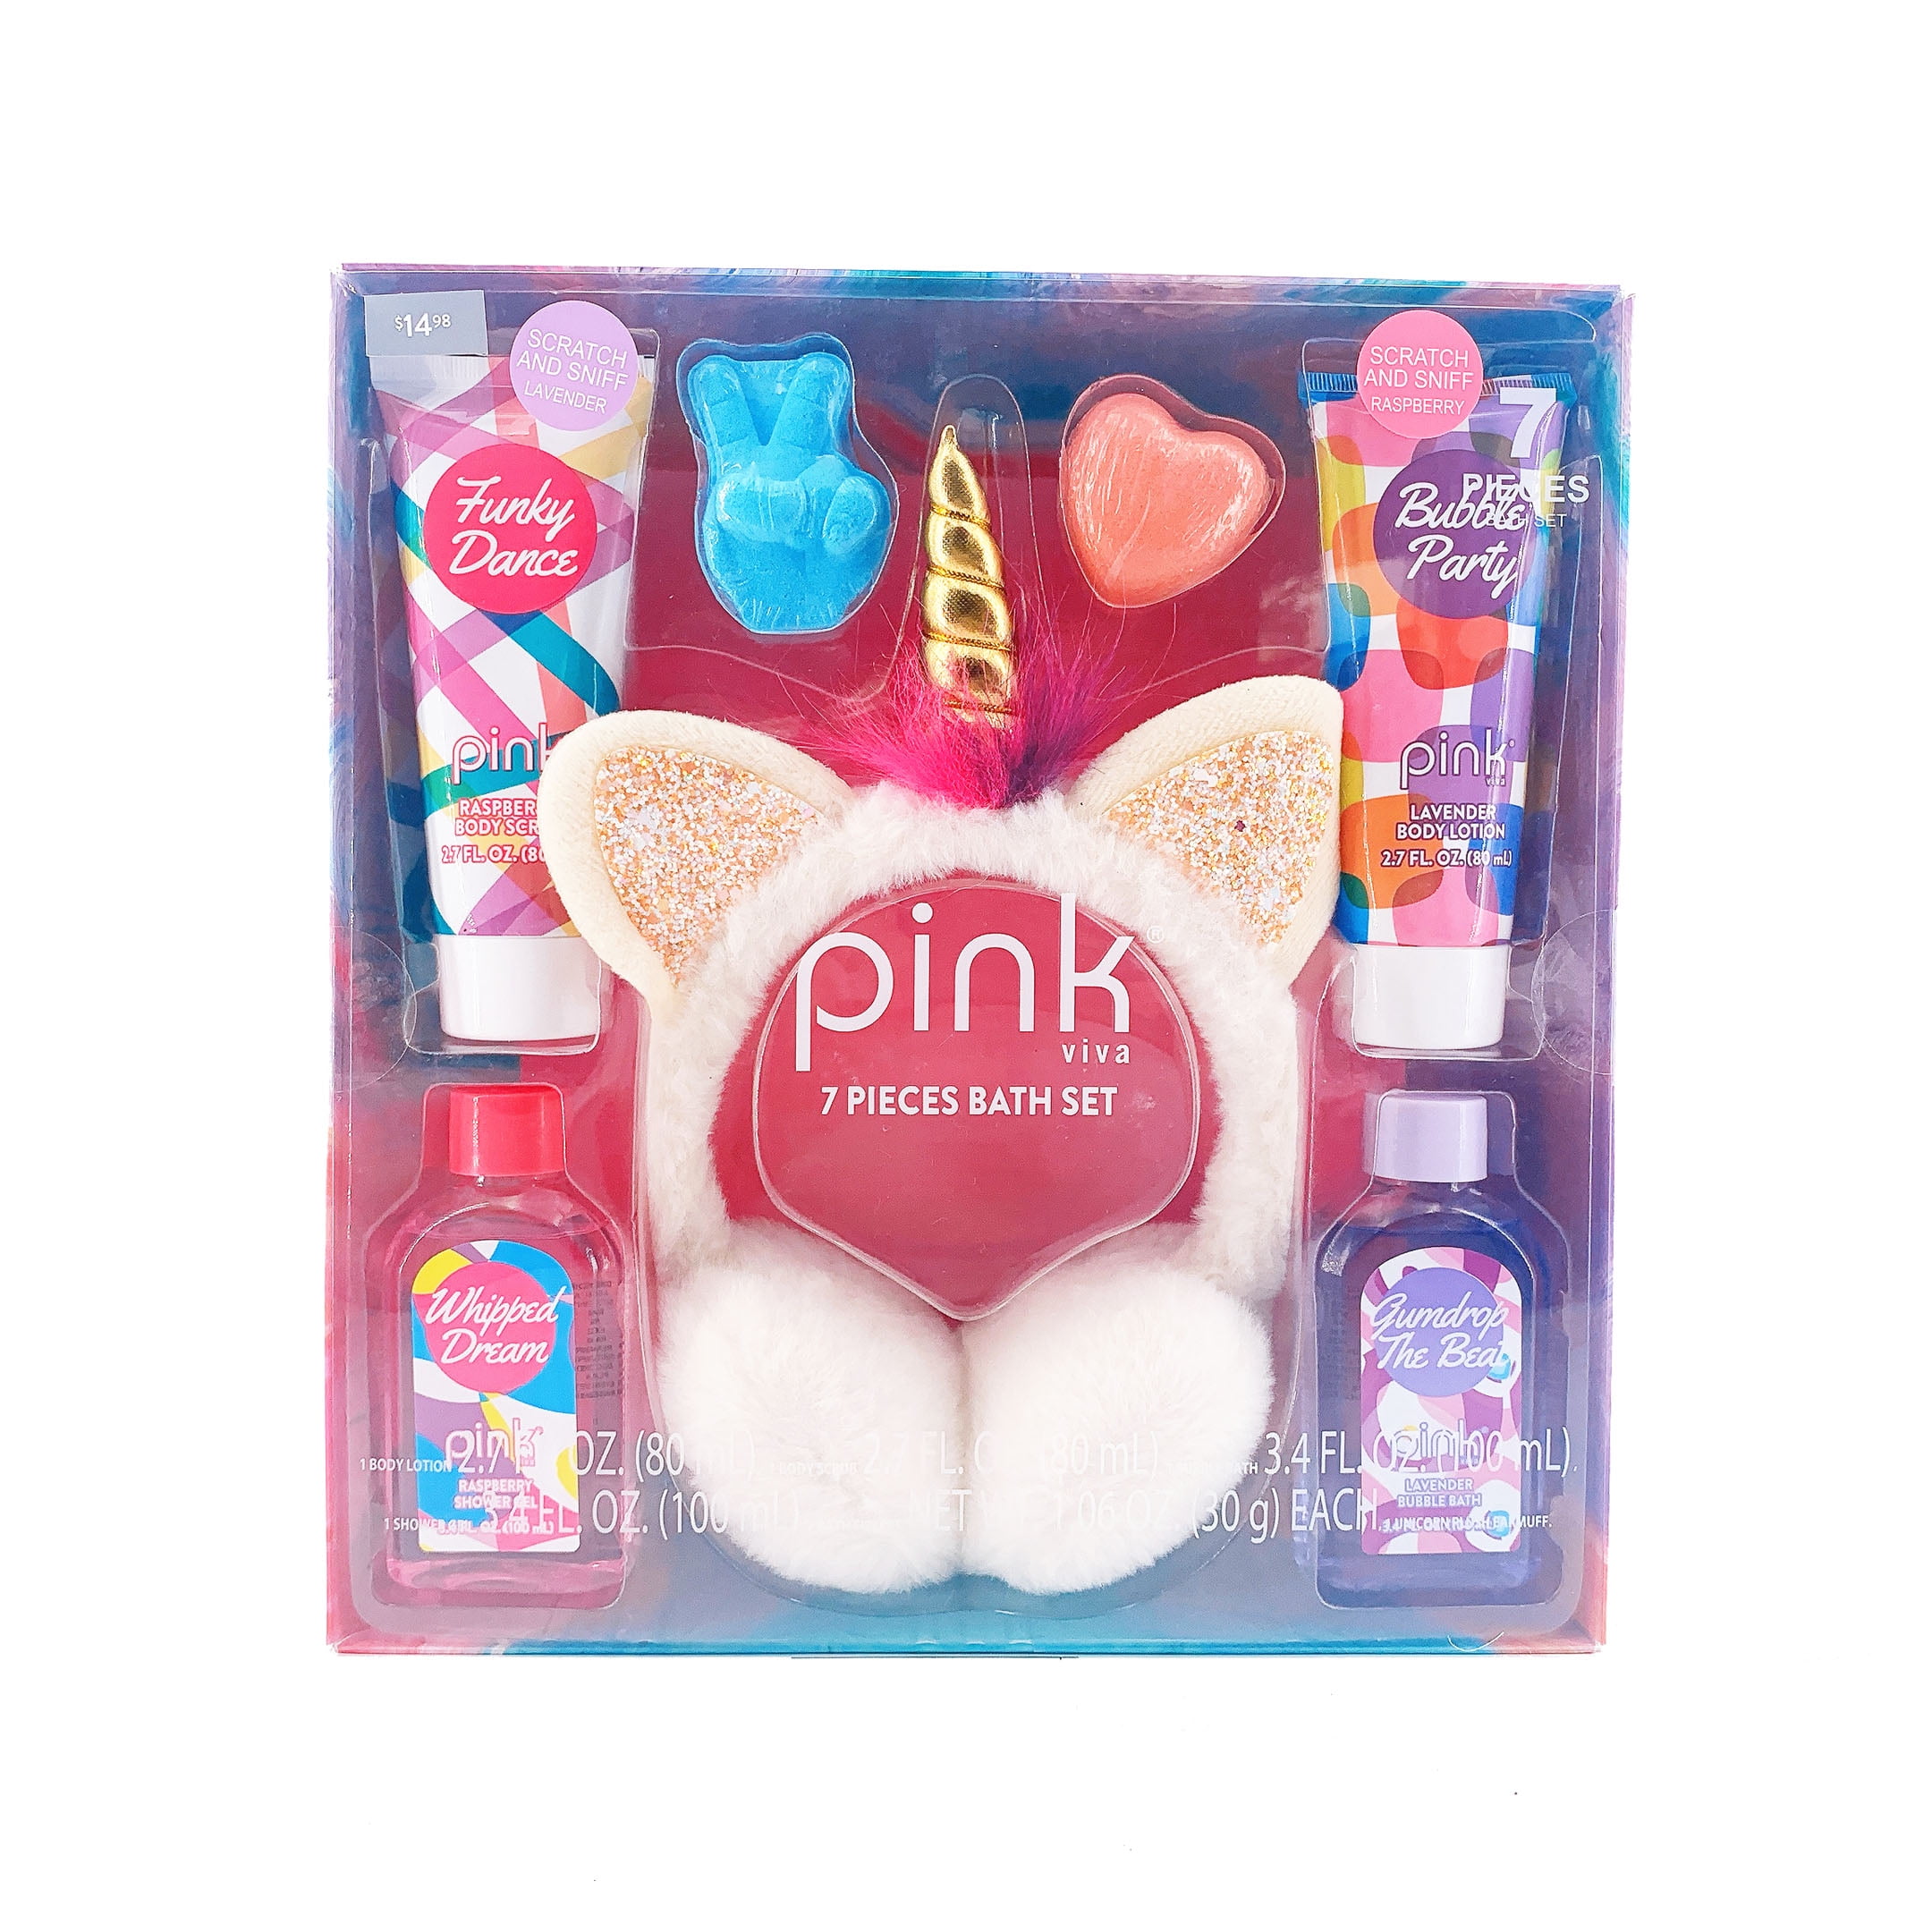 Pink Viva Bath Gift Set with Plush Unicorn Ear Muffs, Raspberry & Lavender, 7 Piece Set